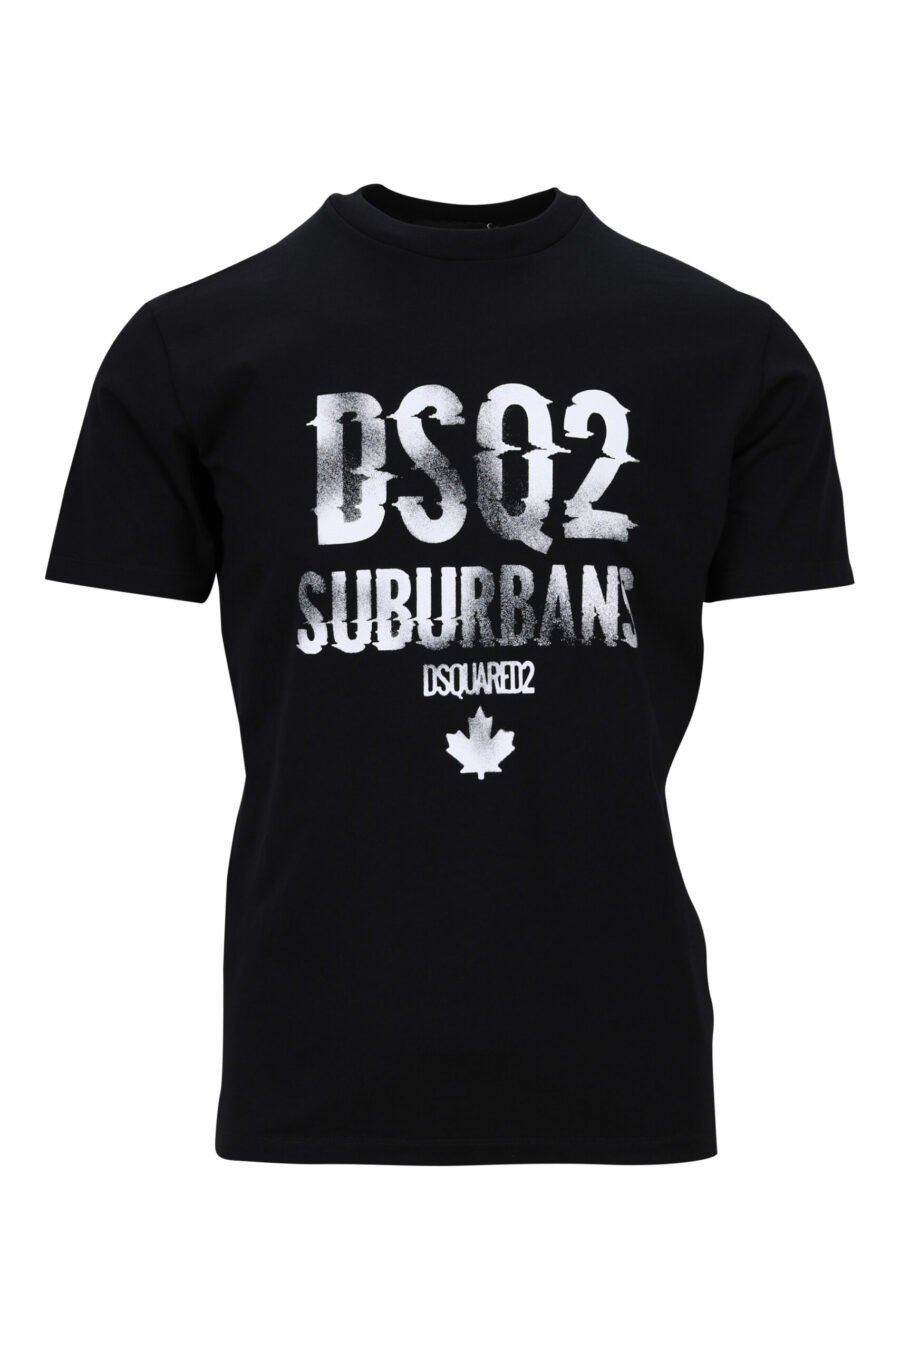 Camiseta negra con maxilogo "suburbans" blanco - 8054148503932 scaled